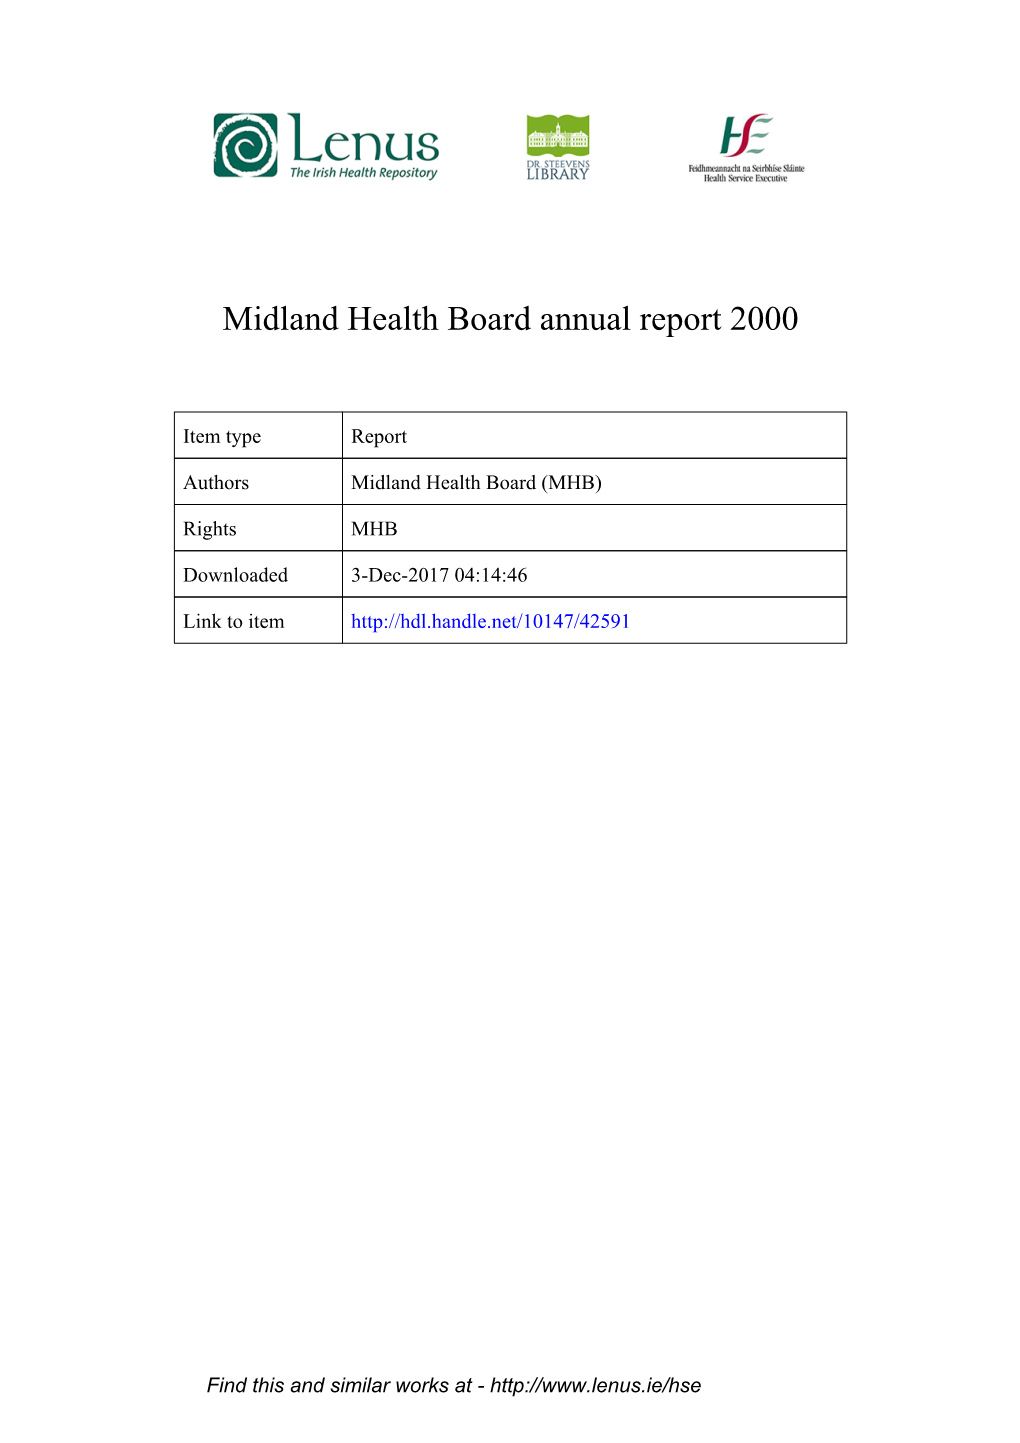 Midland Health Board Annual Report 2000